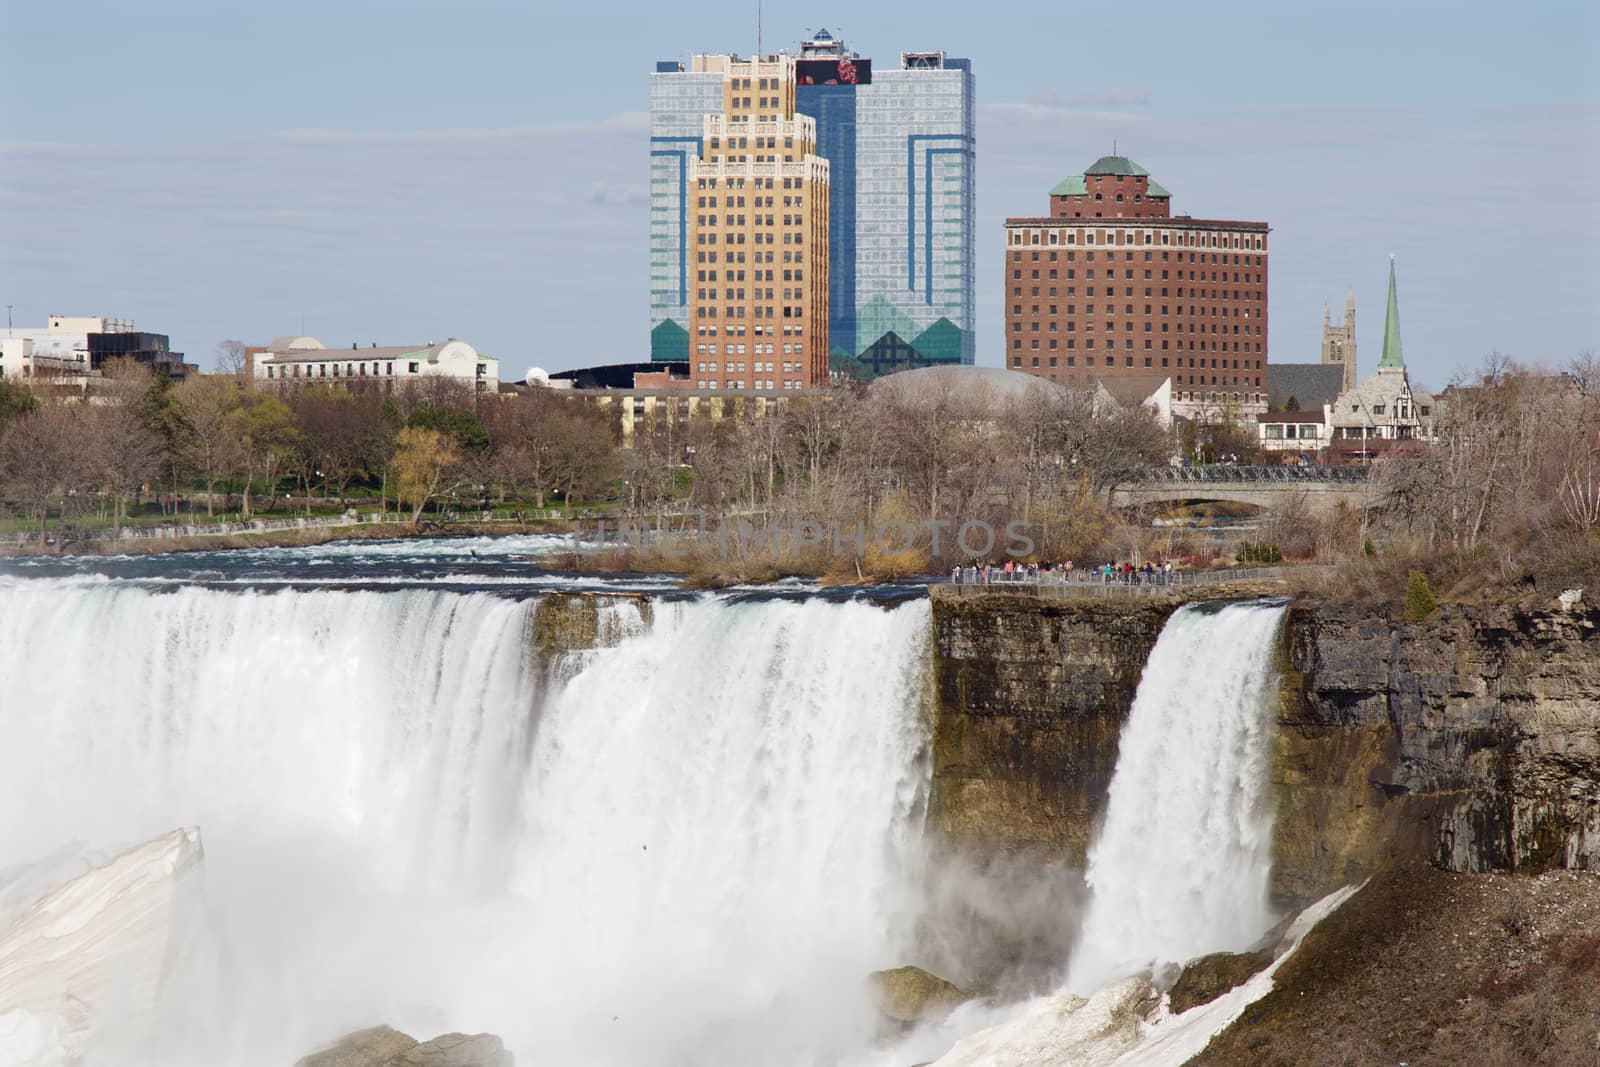 Beautiful image of the Niagara falls at the American side